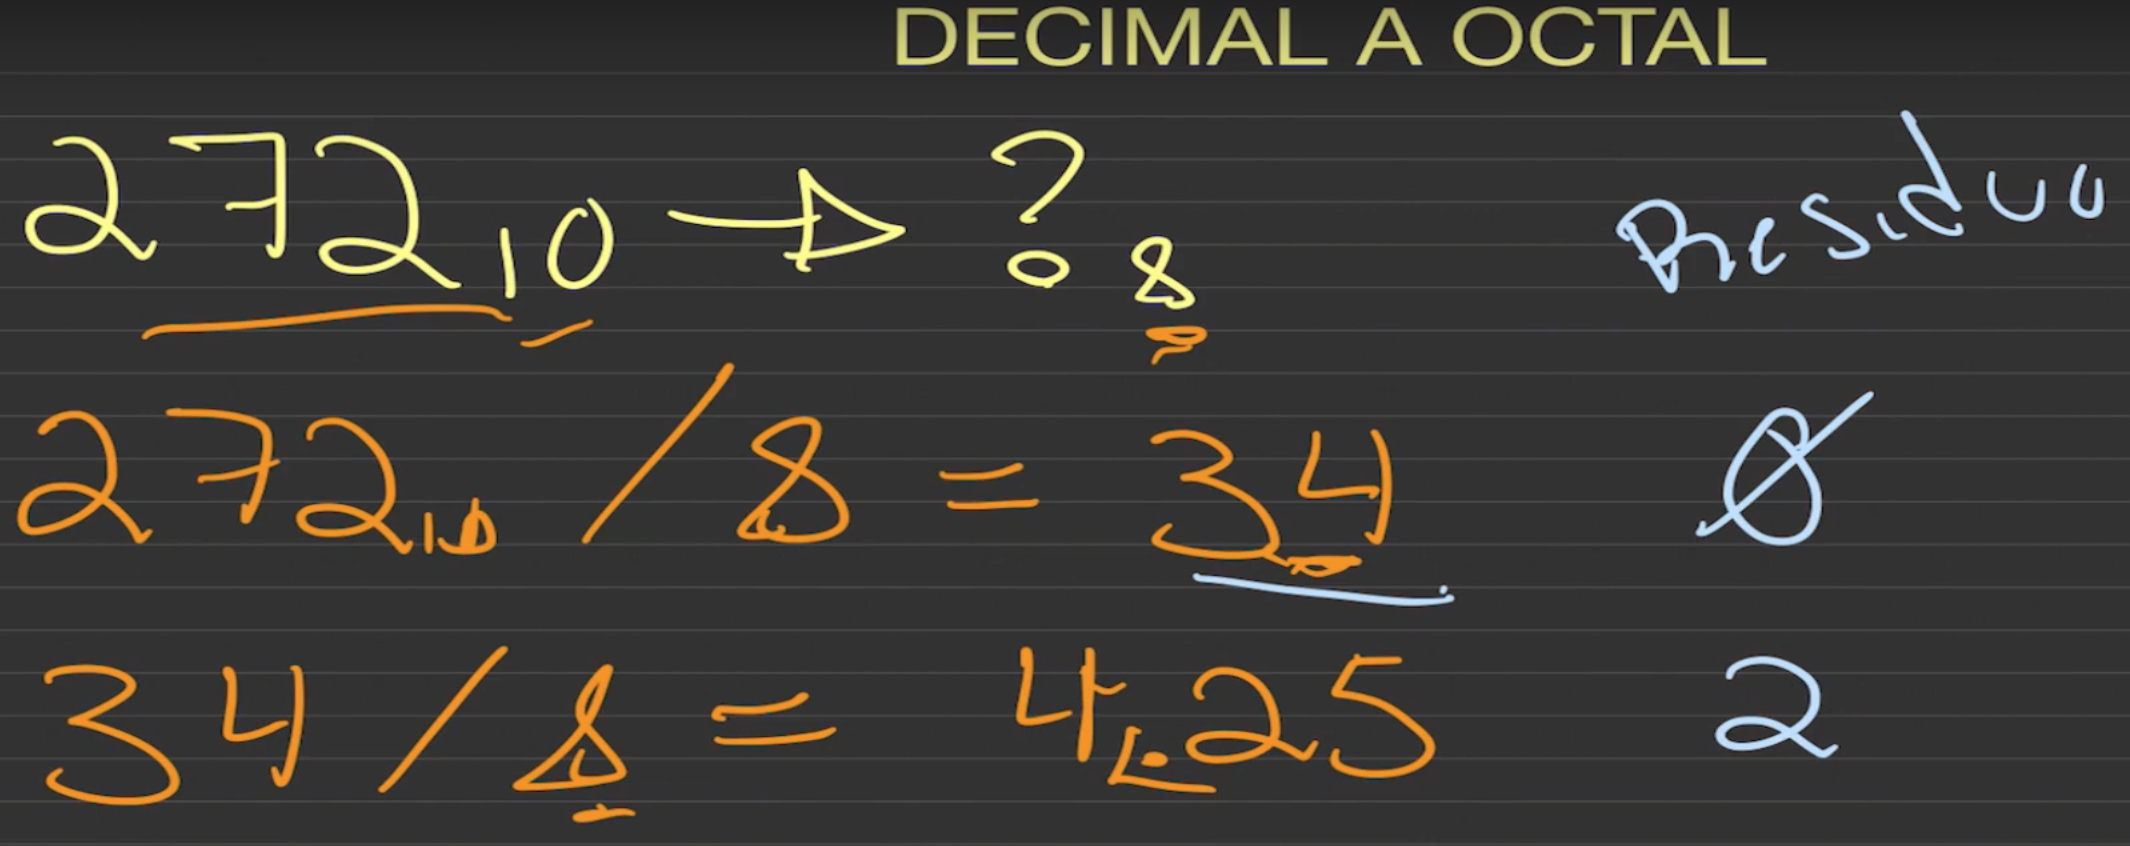 convertir decimal a octal paso a paso